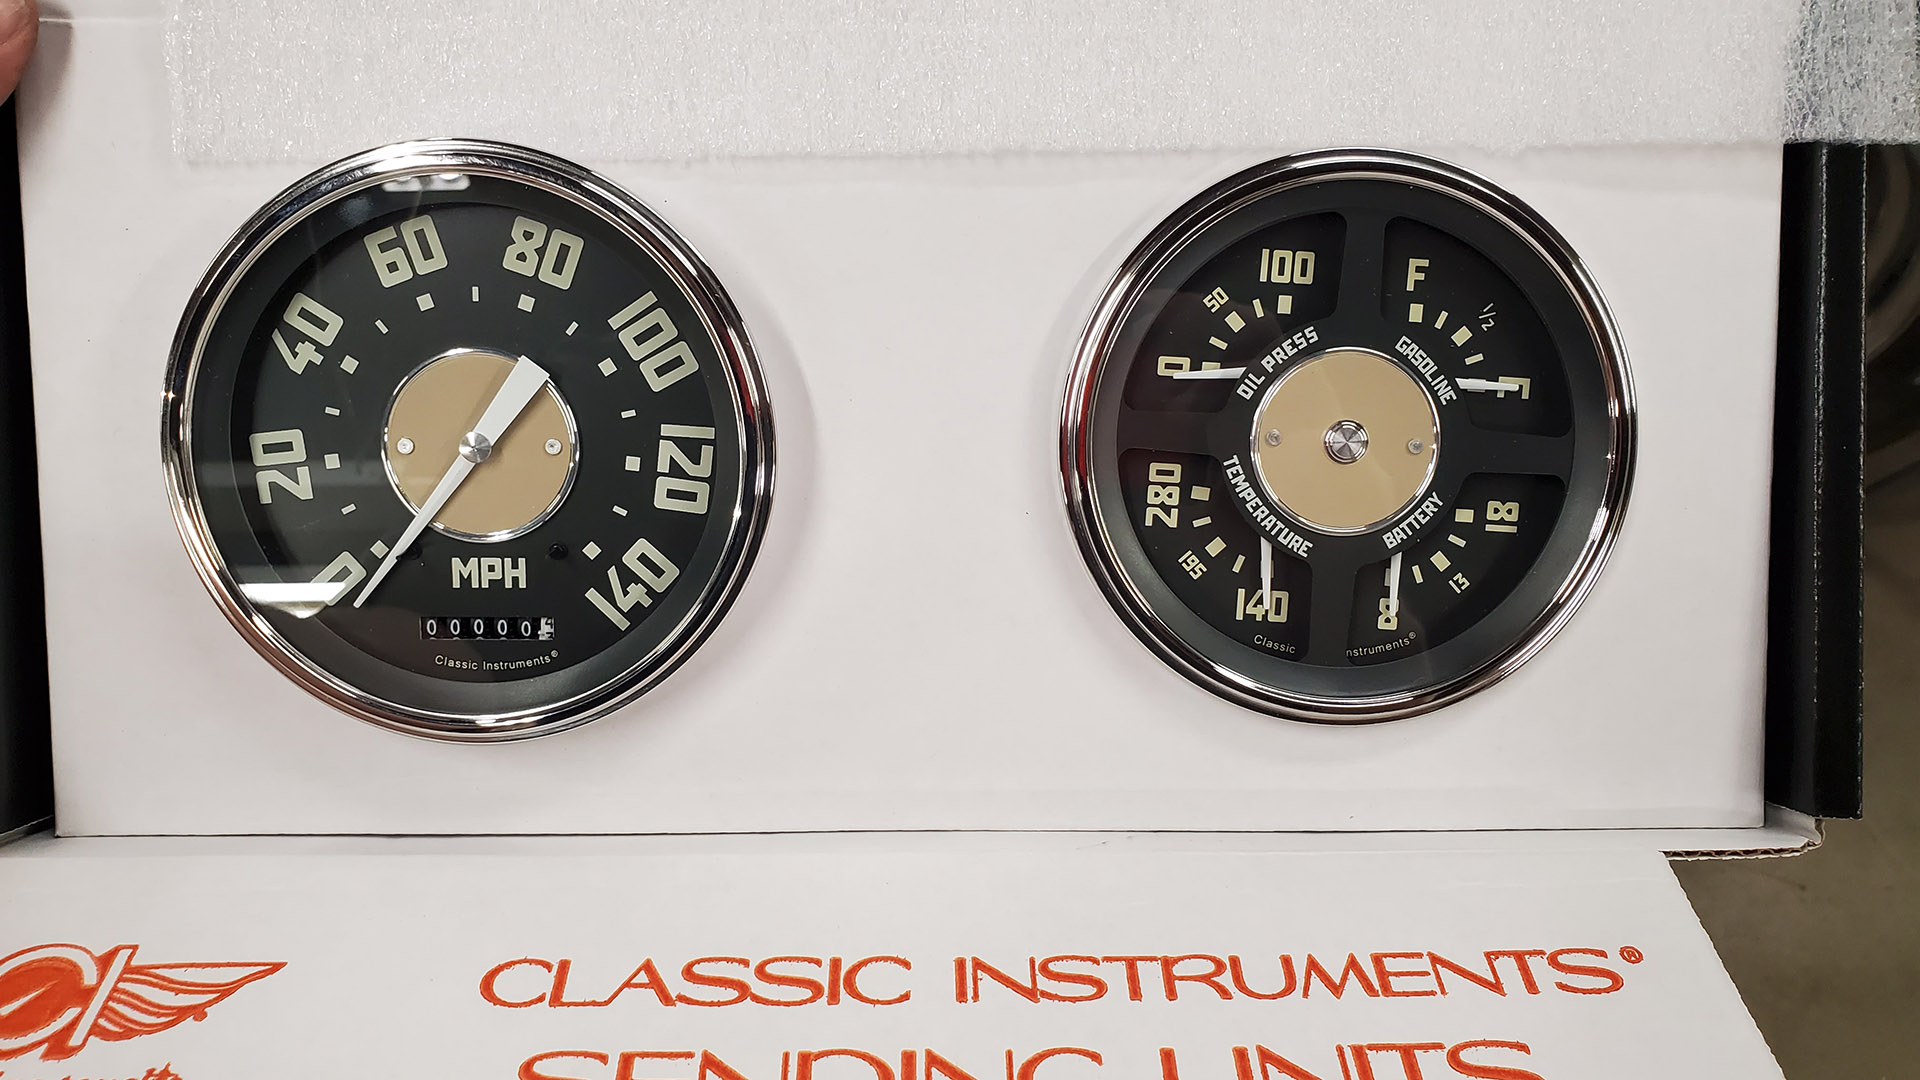 Classic Instruments. Modern internals with an original look.